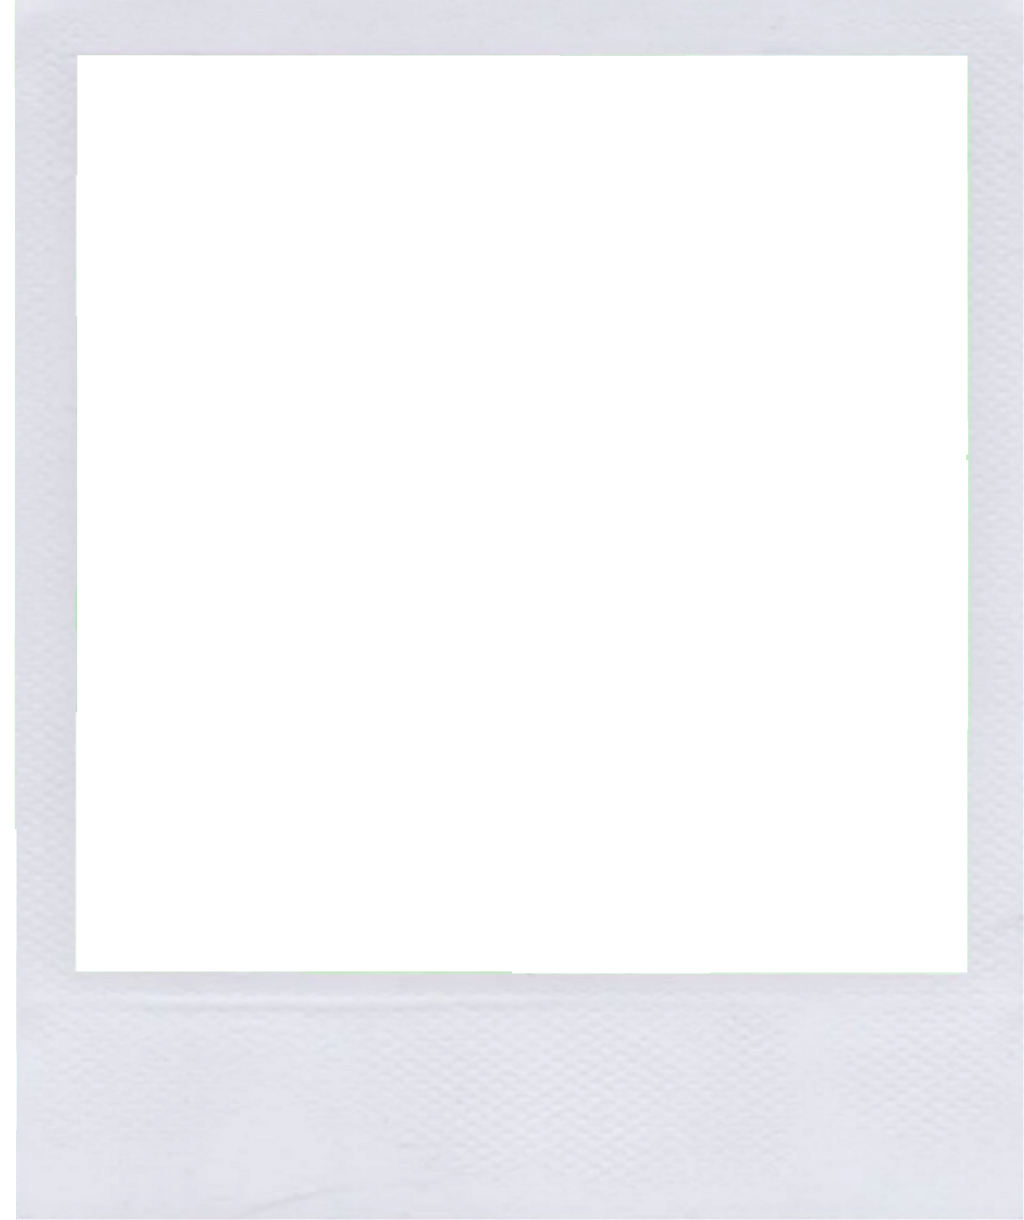 polaroid clipart black square frame